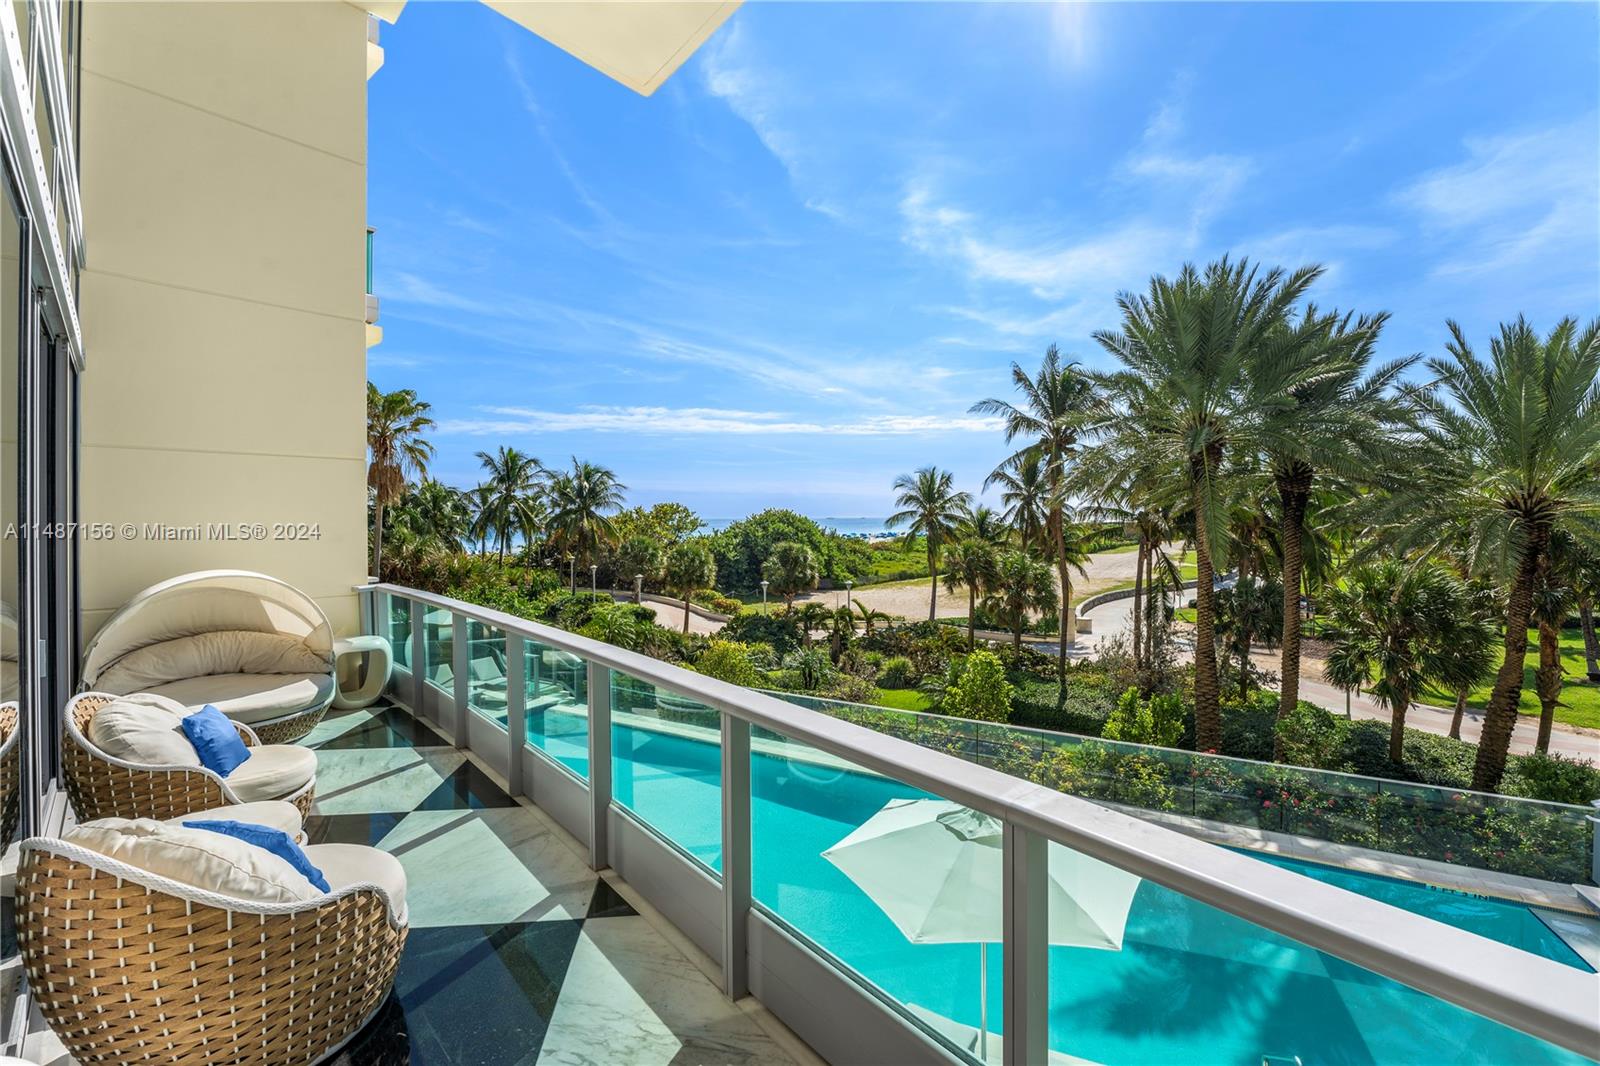 Property for Sale at 1455 Ocean Dr Bh-01, Miami Beach, Miami-Dade County, Florida - Bedrooms: 3 
Bathrooms: 5  - $7,995,000